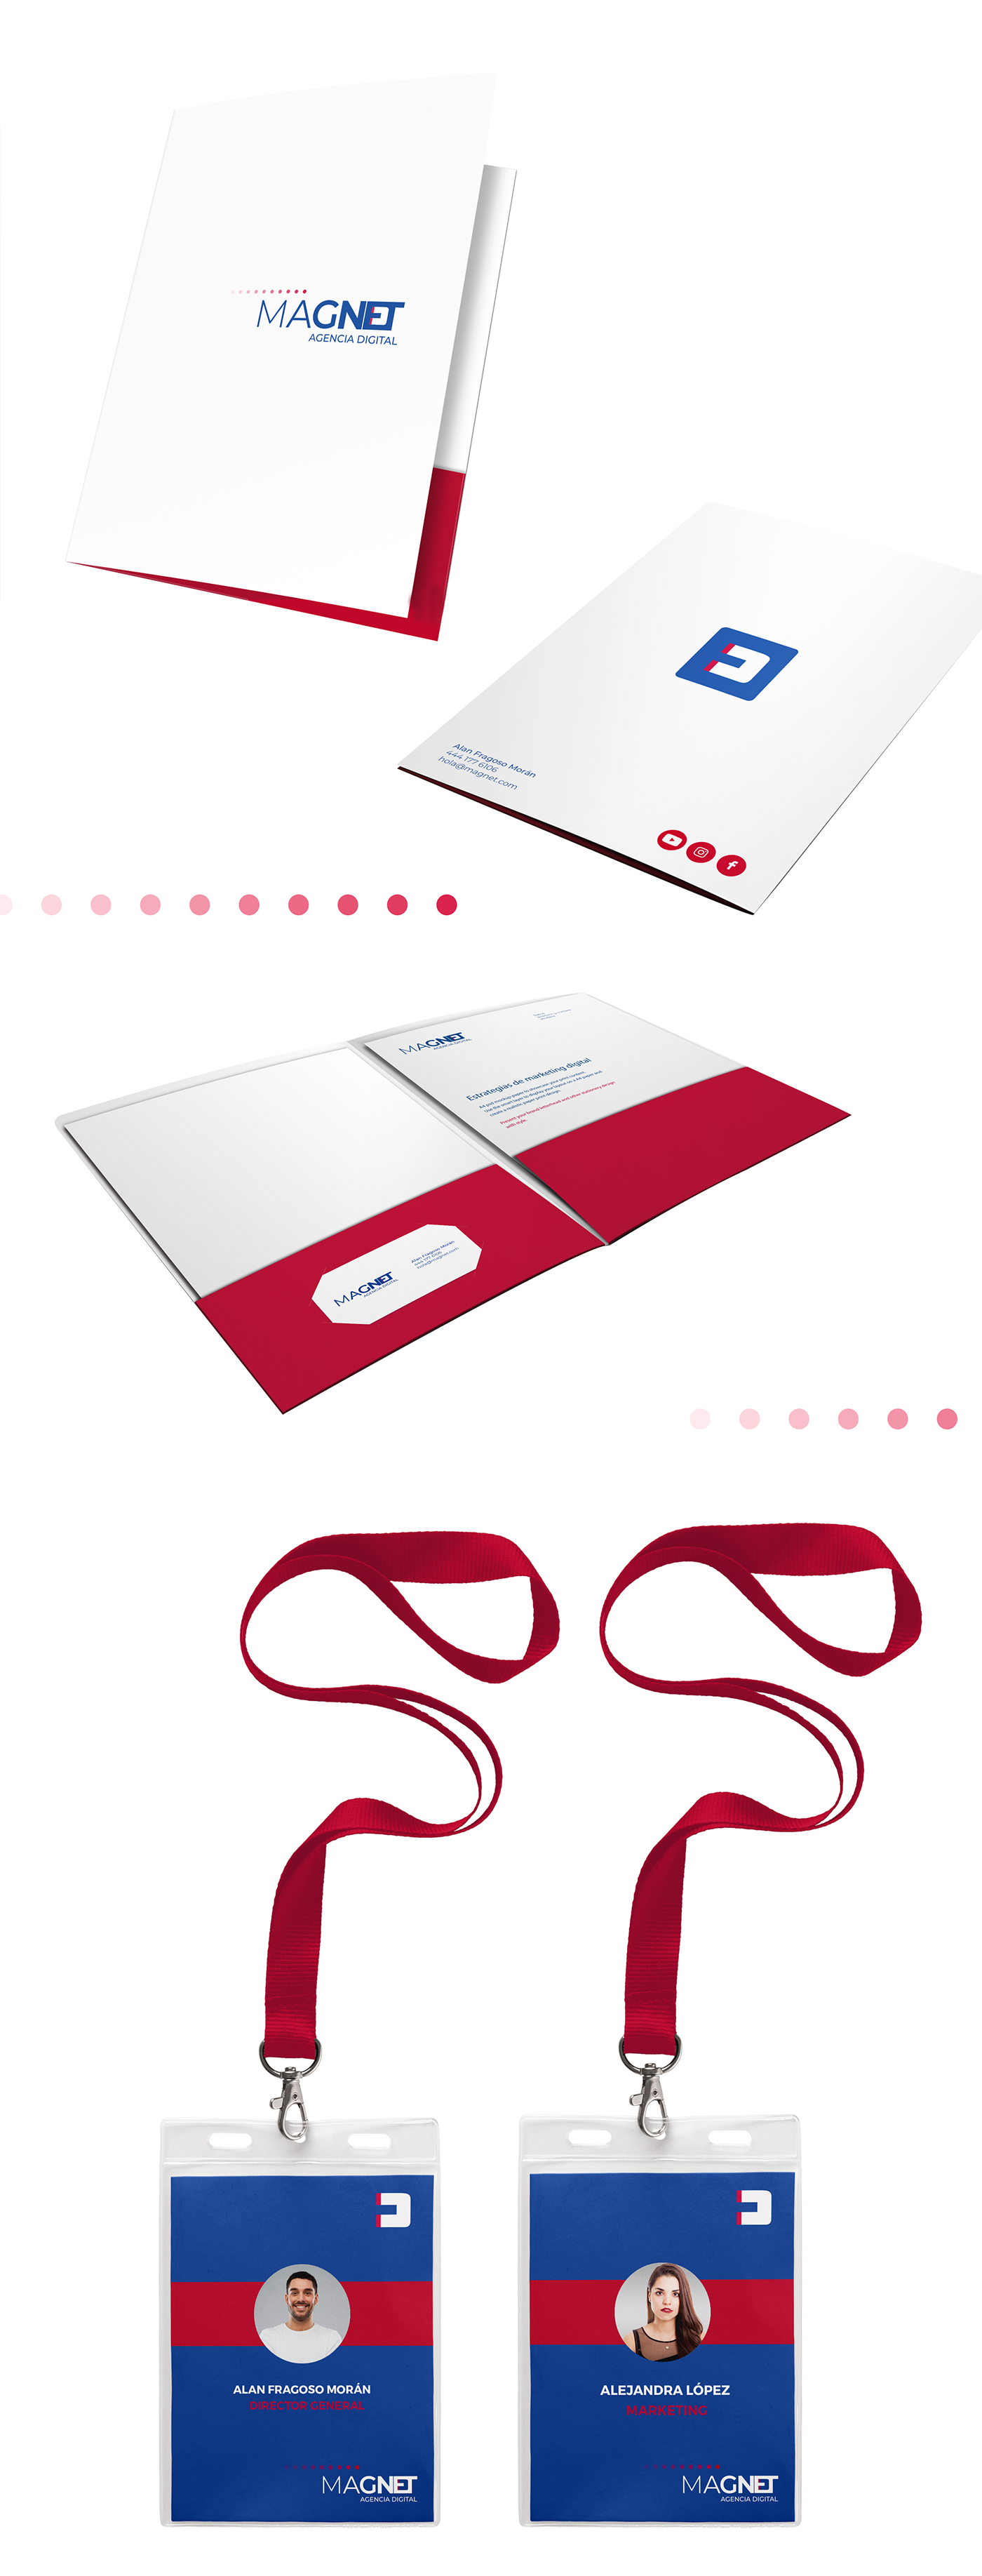 magnet logo marketing   agency digital maketing branding project motion graphics 